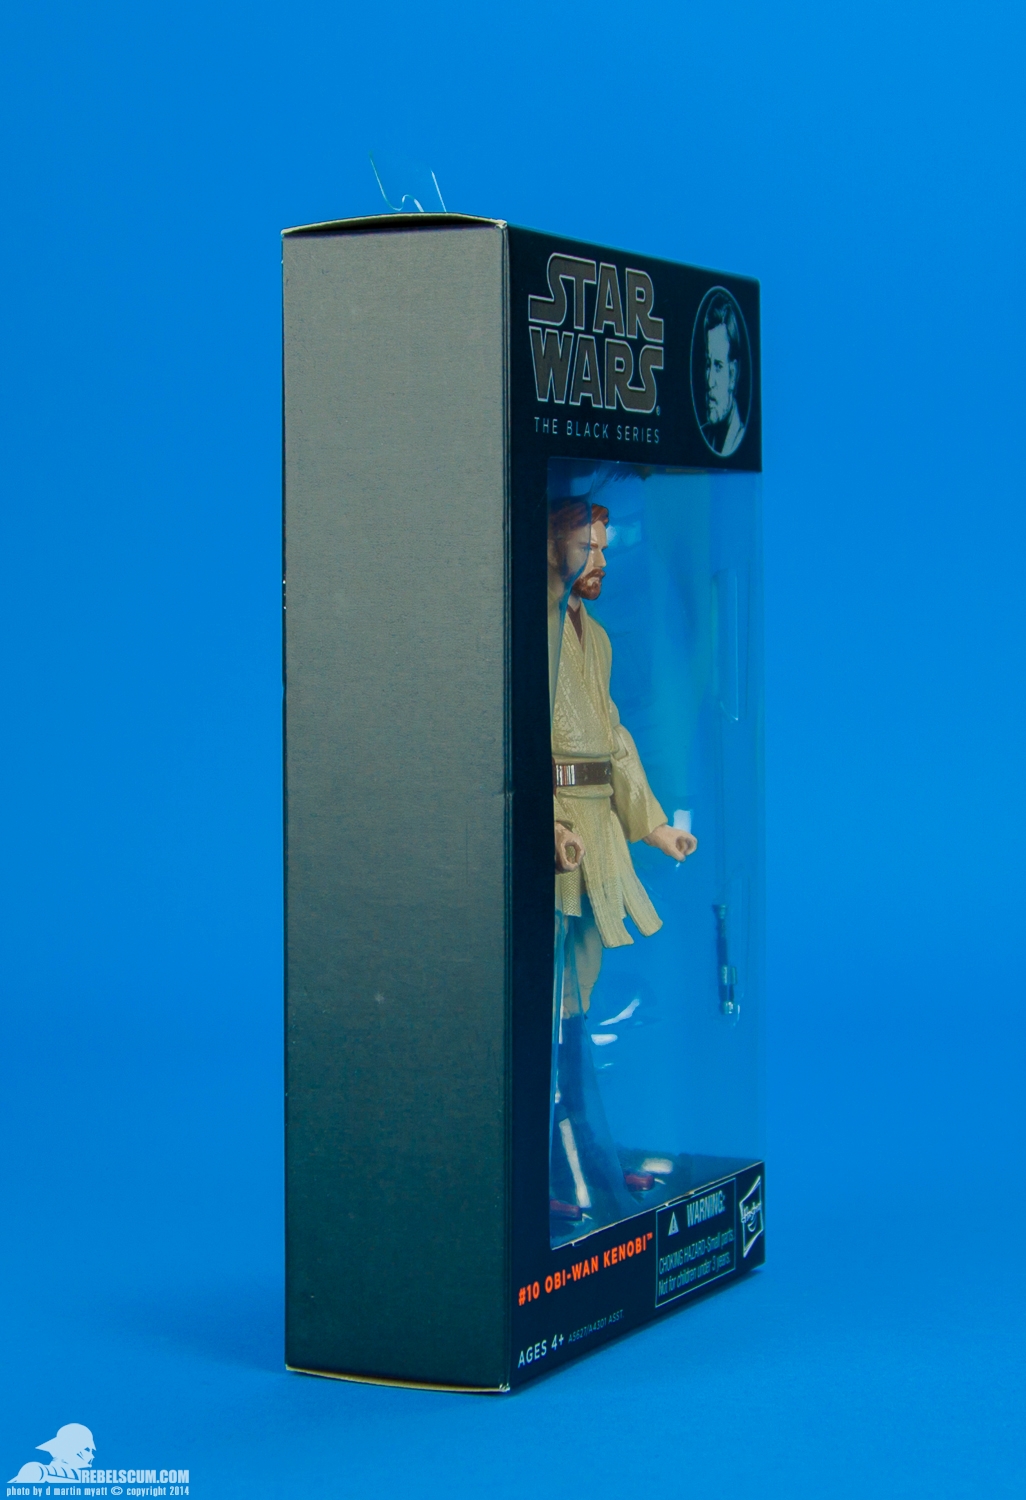 10-Obi-Wan-Kenobi-The-Black-Series-3-Hasbro-017.jpg